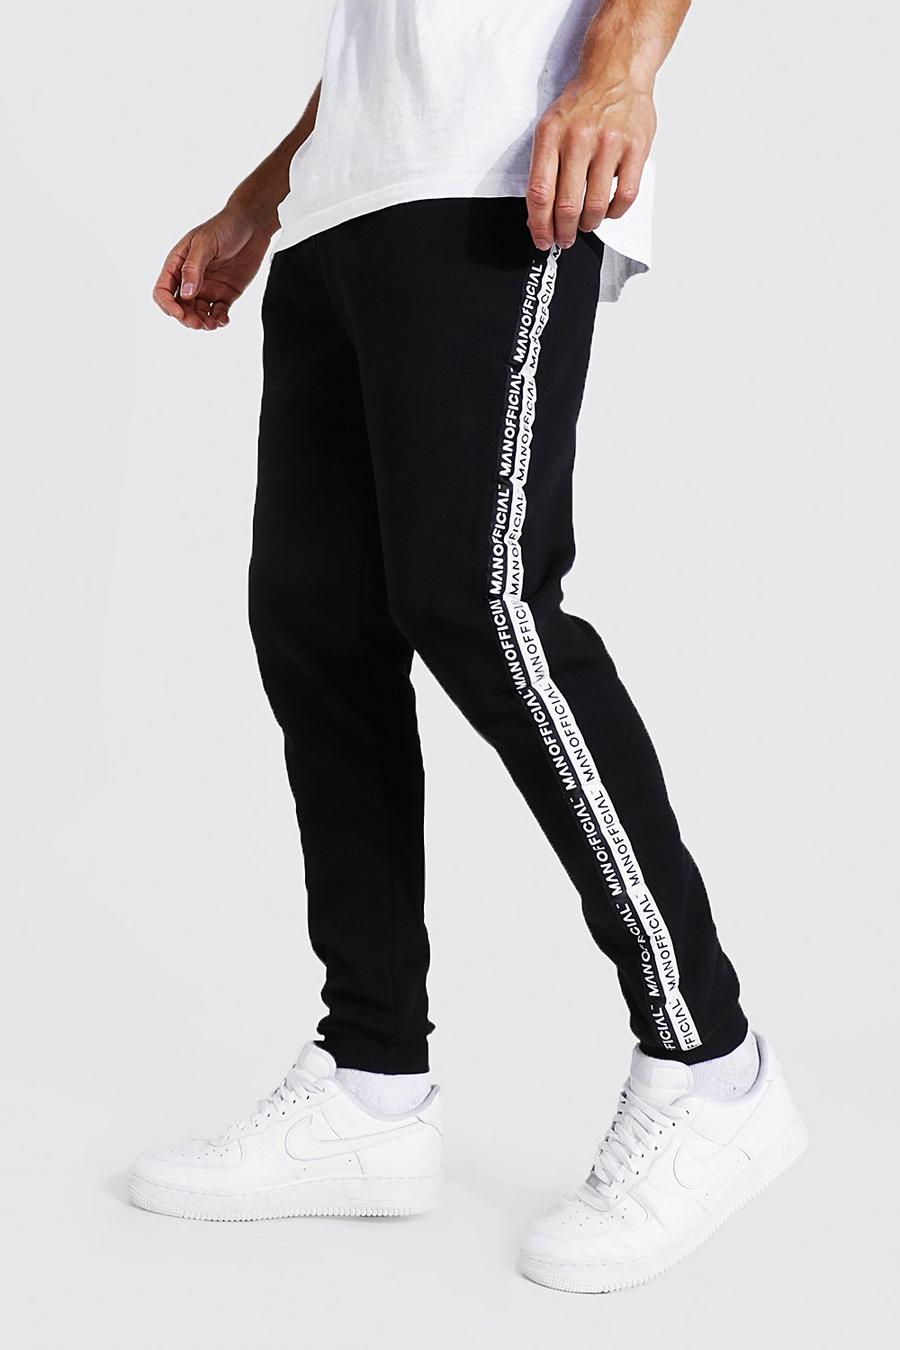 Pantaloni tuta Tall Skinny Fit con striscia laterale con logo Man Official, Black negro image number 1